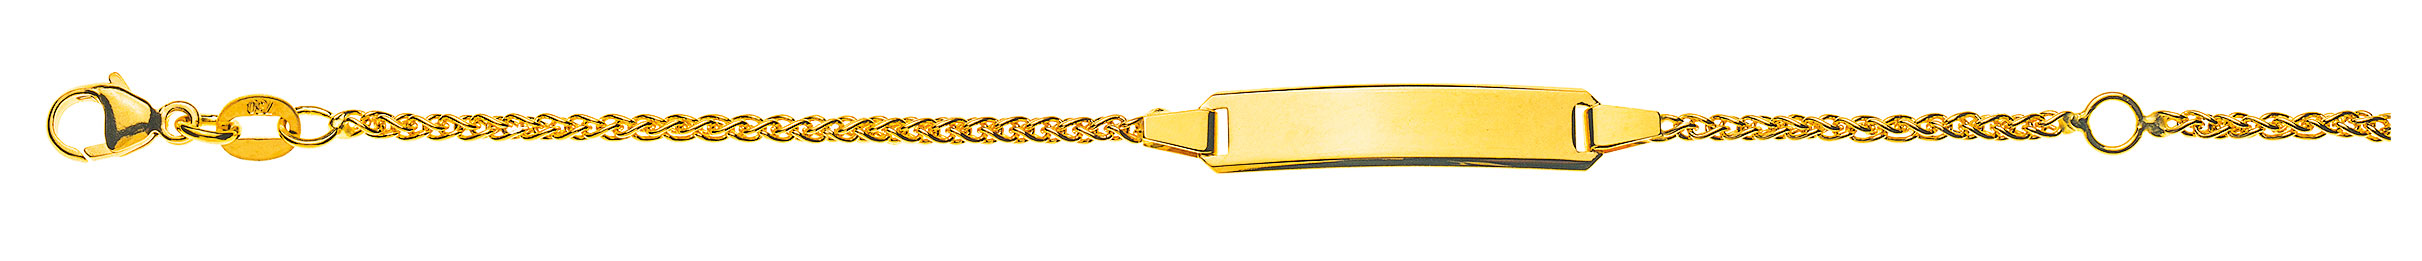 AURONOS Prestige ID-Bracelet en or jaune 18k Chaîne tressée 14cm